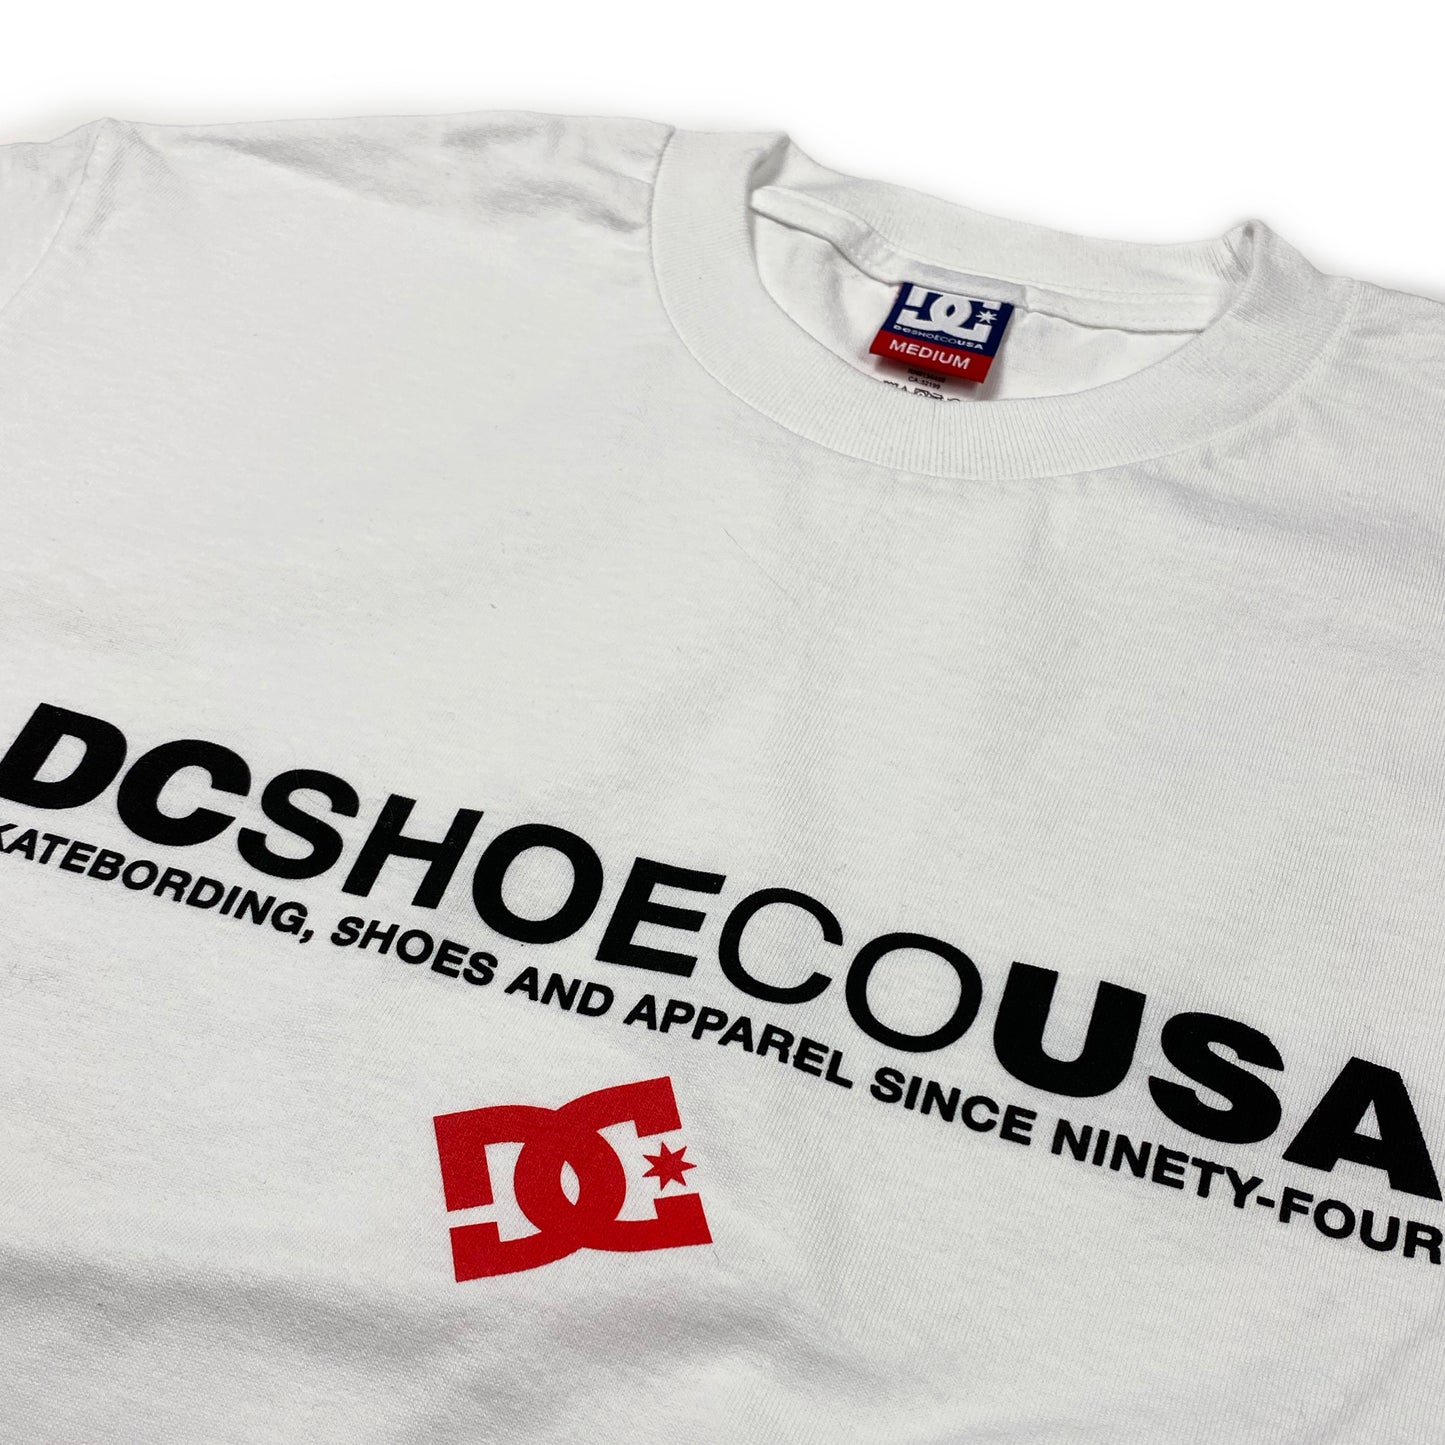 DC USA T-shirt - White - Prime Delux Store